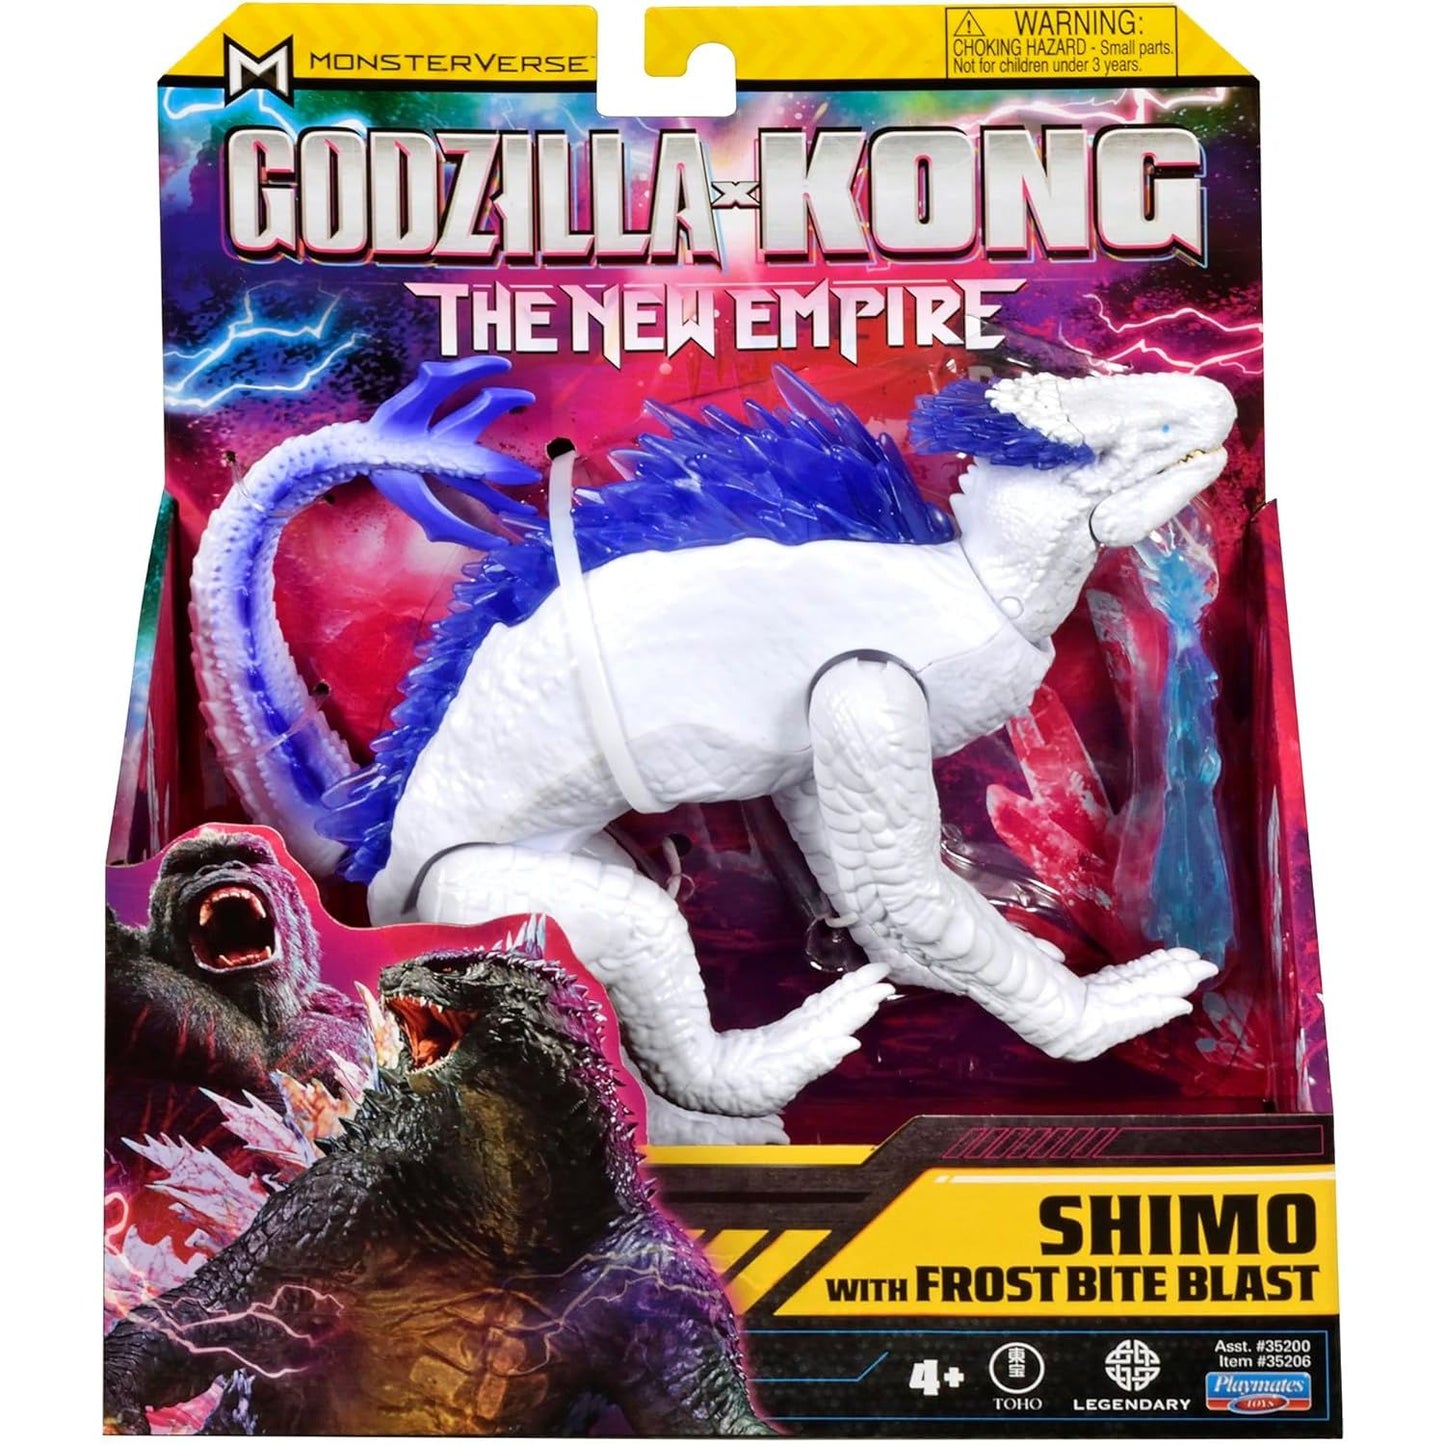 Godzilla x Kong : The New Empire - 6" Figure Shimo with Frost Bite Blast